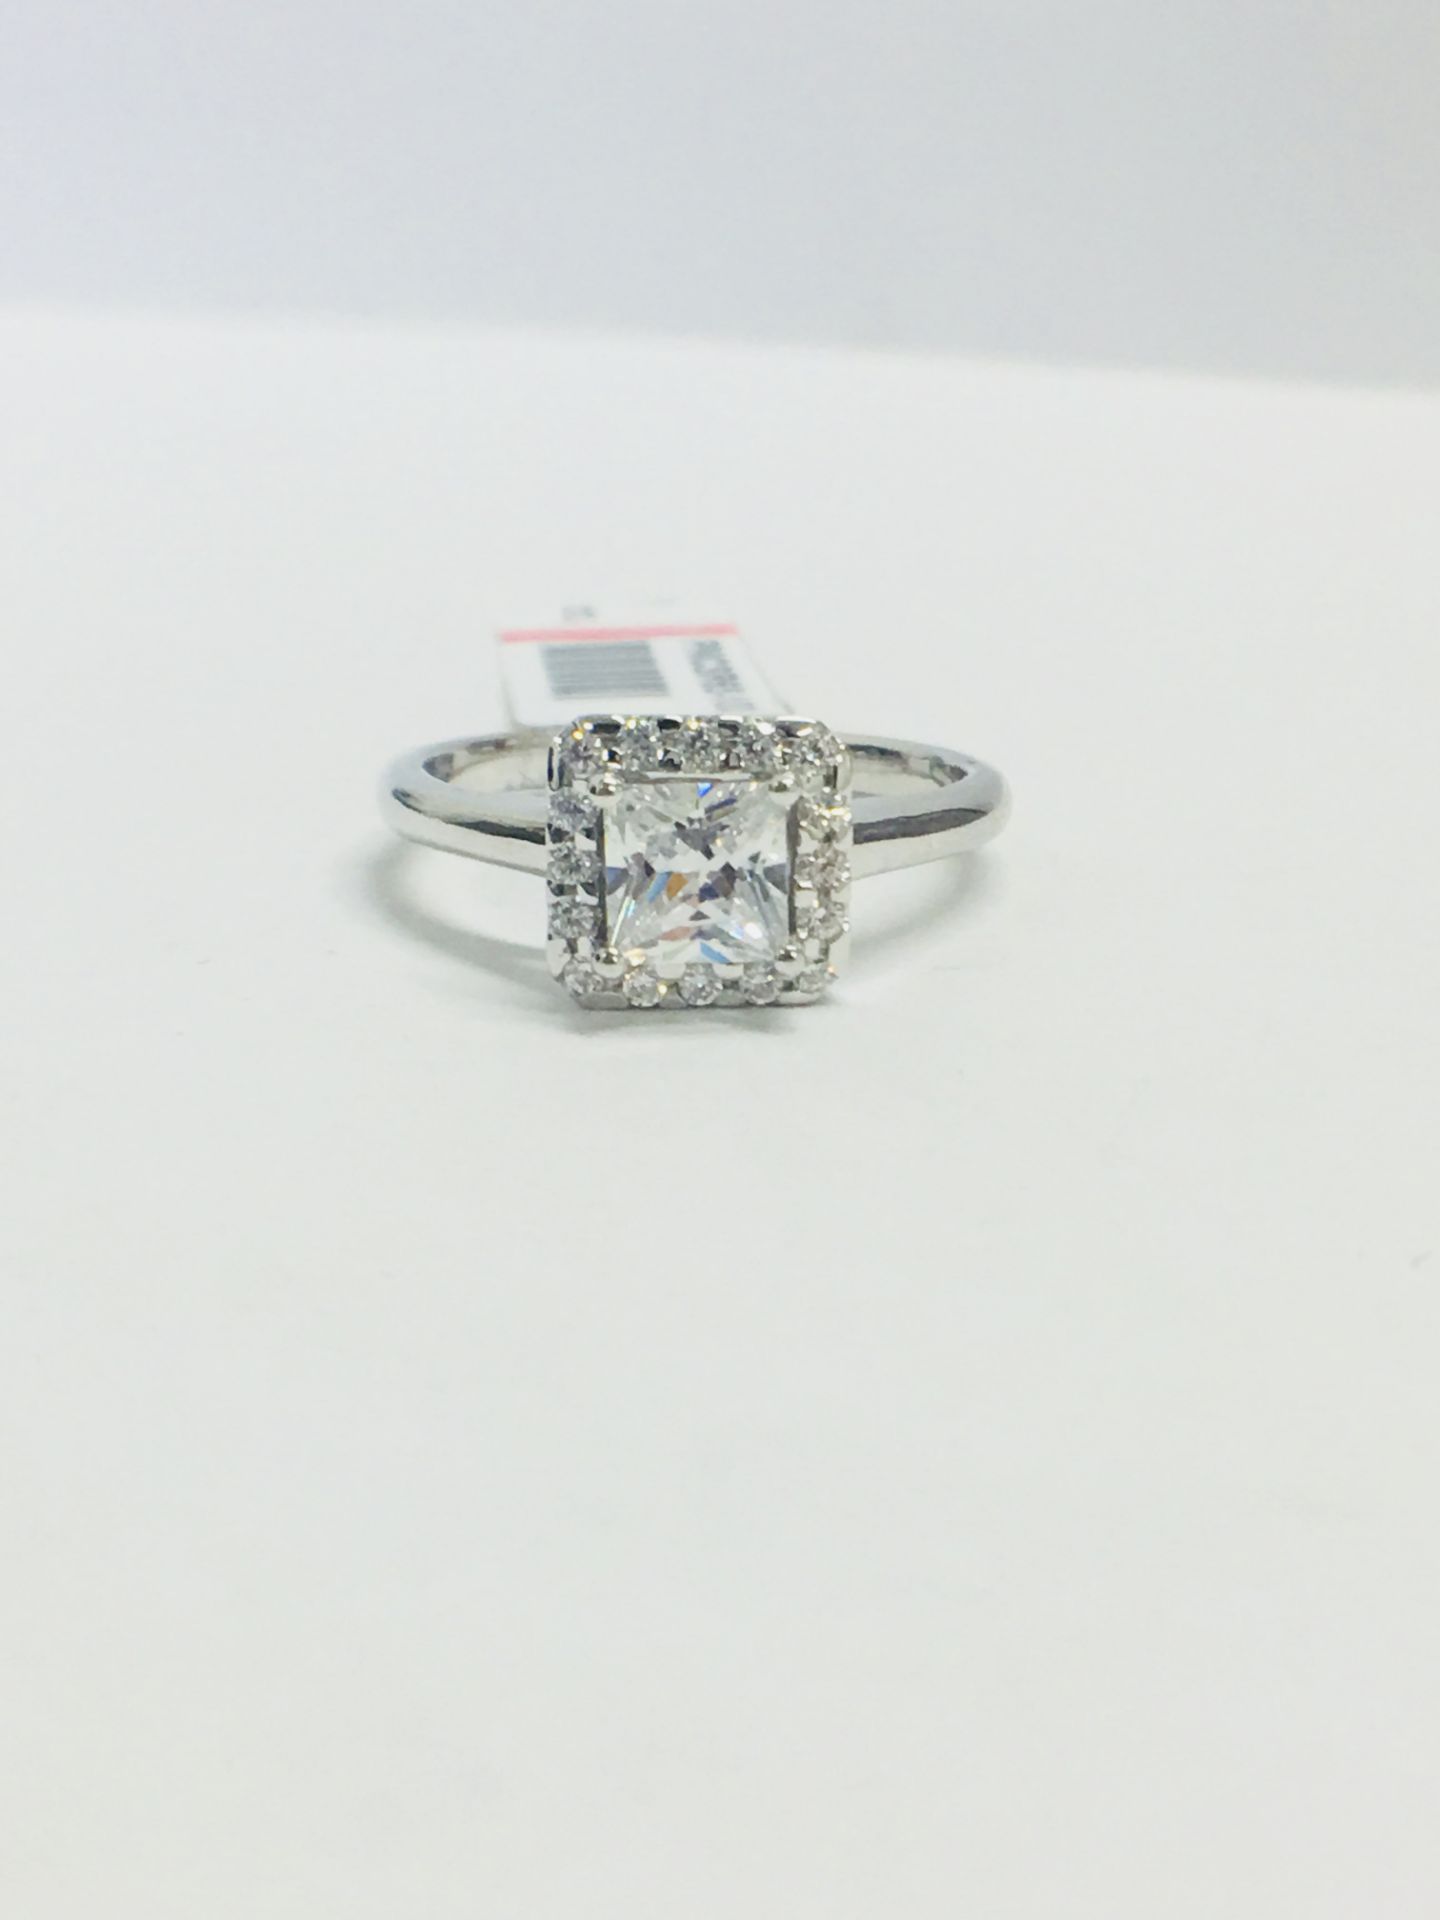 Platinum Princess cut Diamond Ring,1ct Princess cut natural diamond,h colour,si1 clarity,16 round